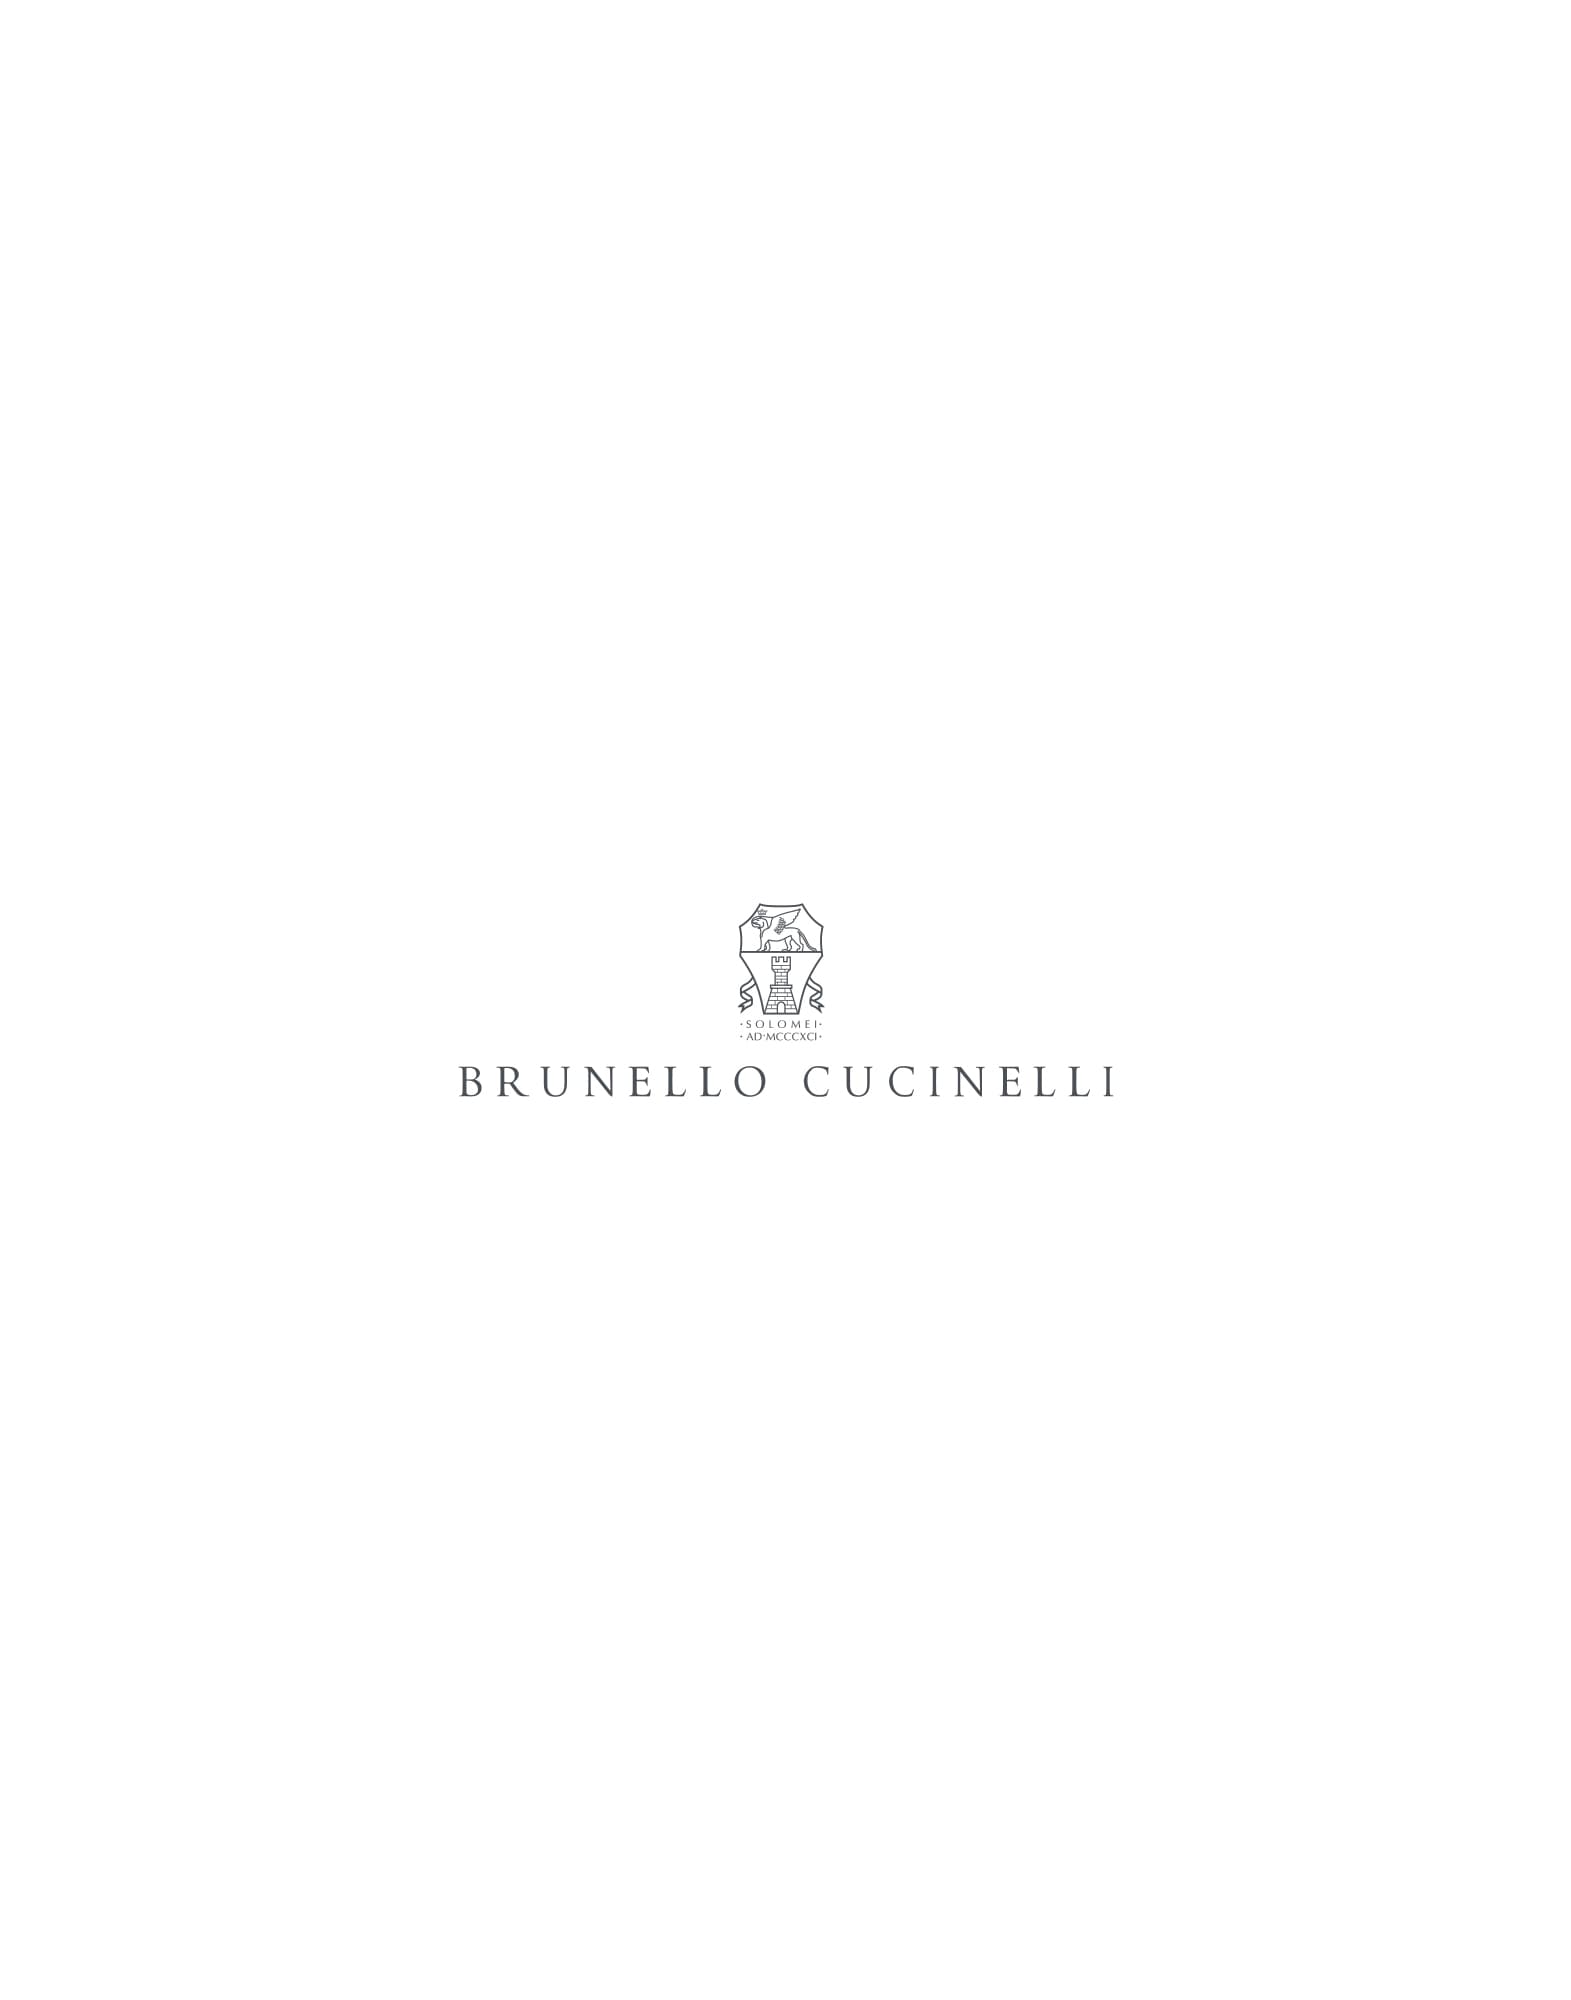 Brunello Cucinelli, Brands of the World™